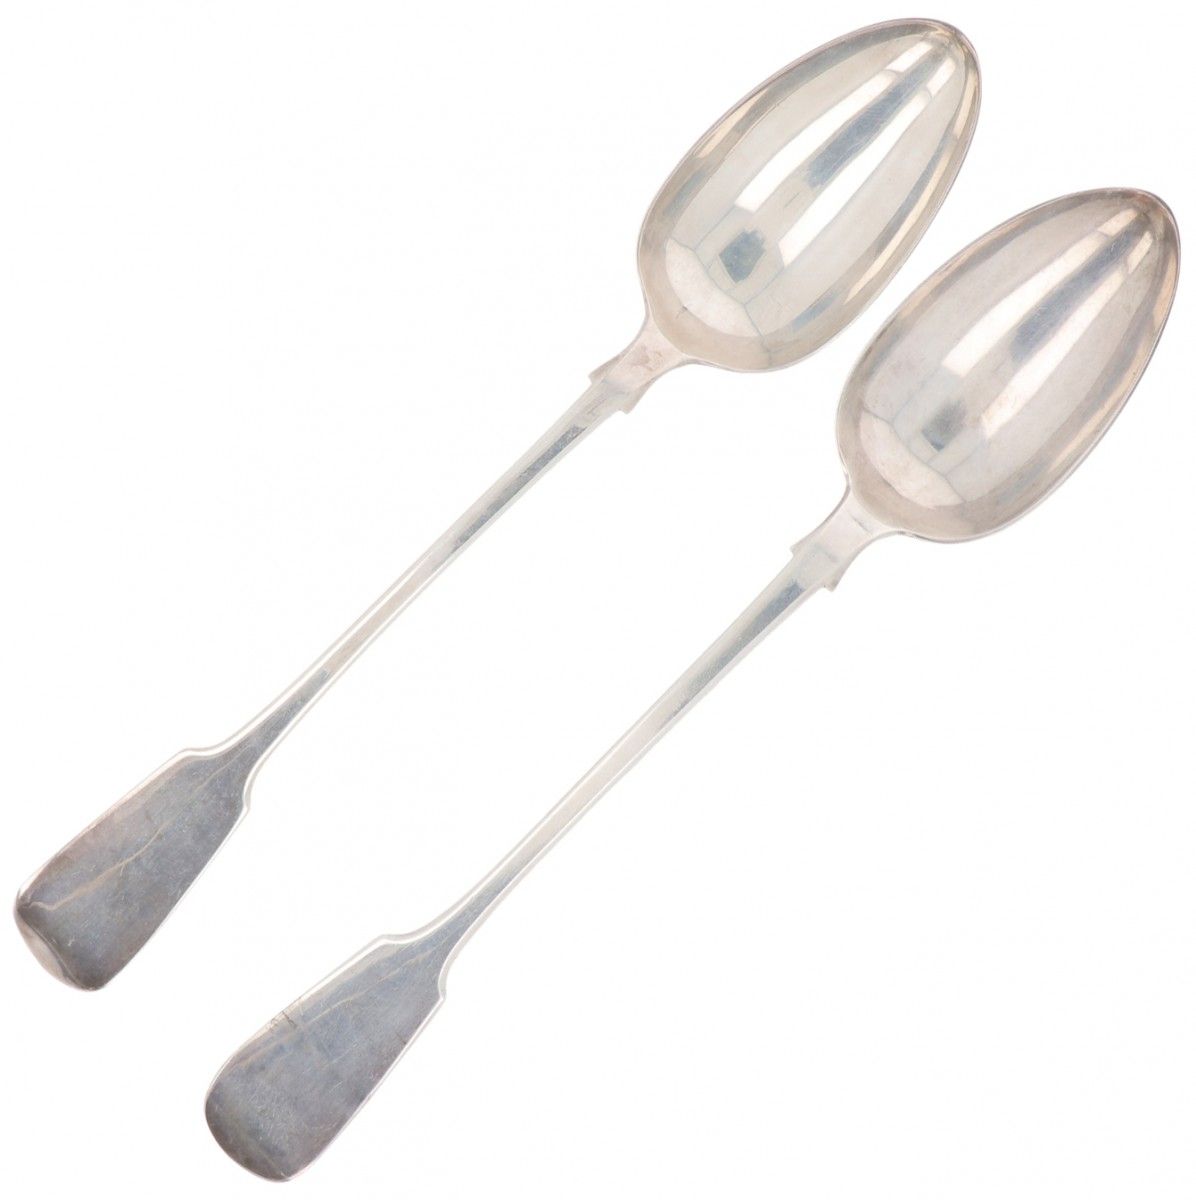 (2) piece set spoons silver. Modello grande con manico liscio e punta leggerment&hellip;